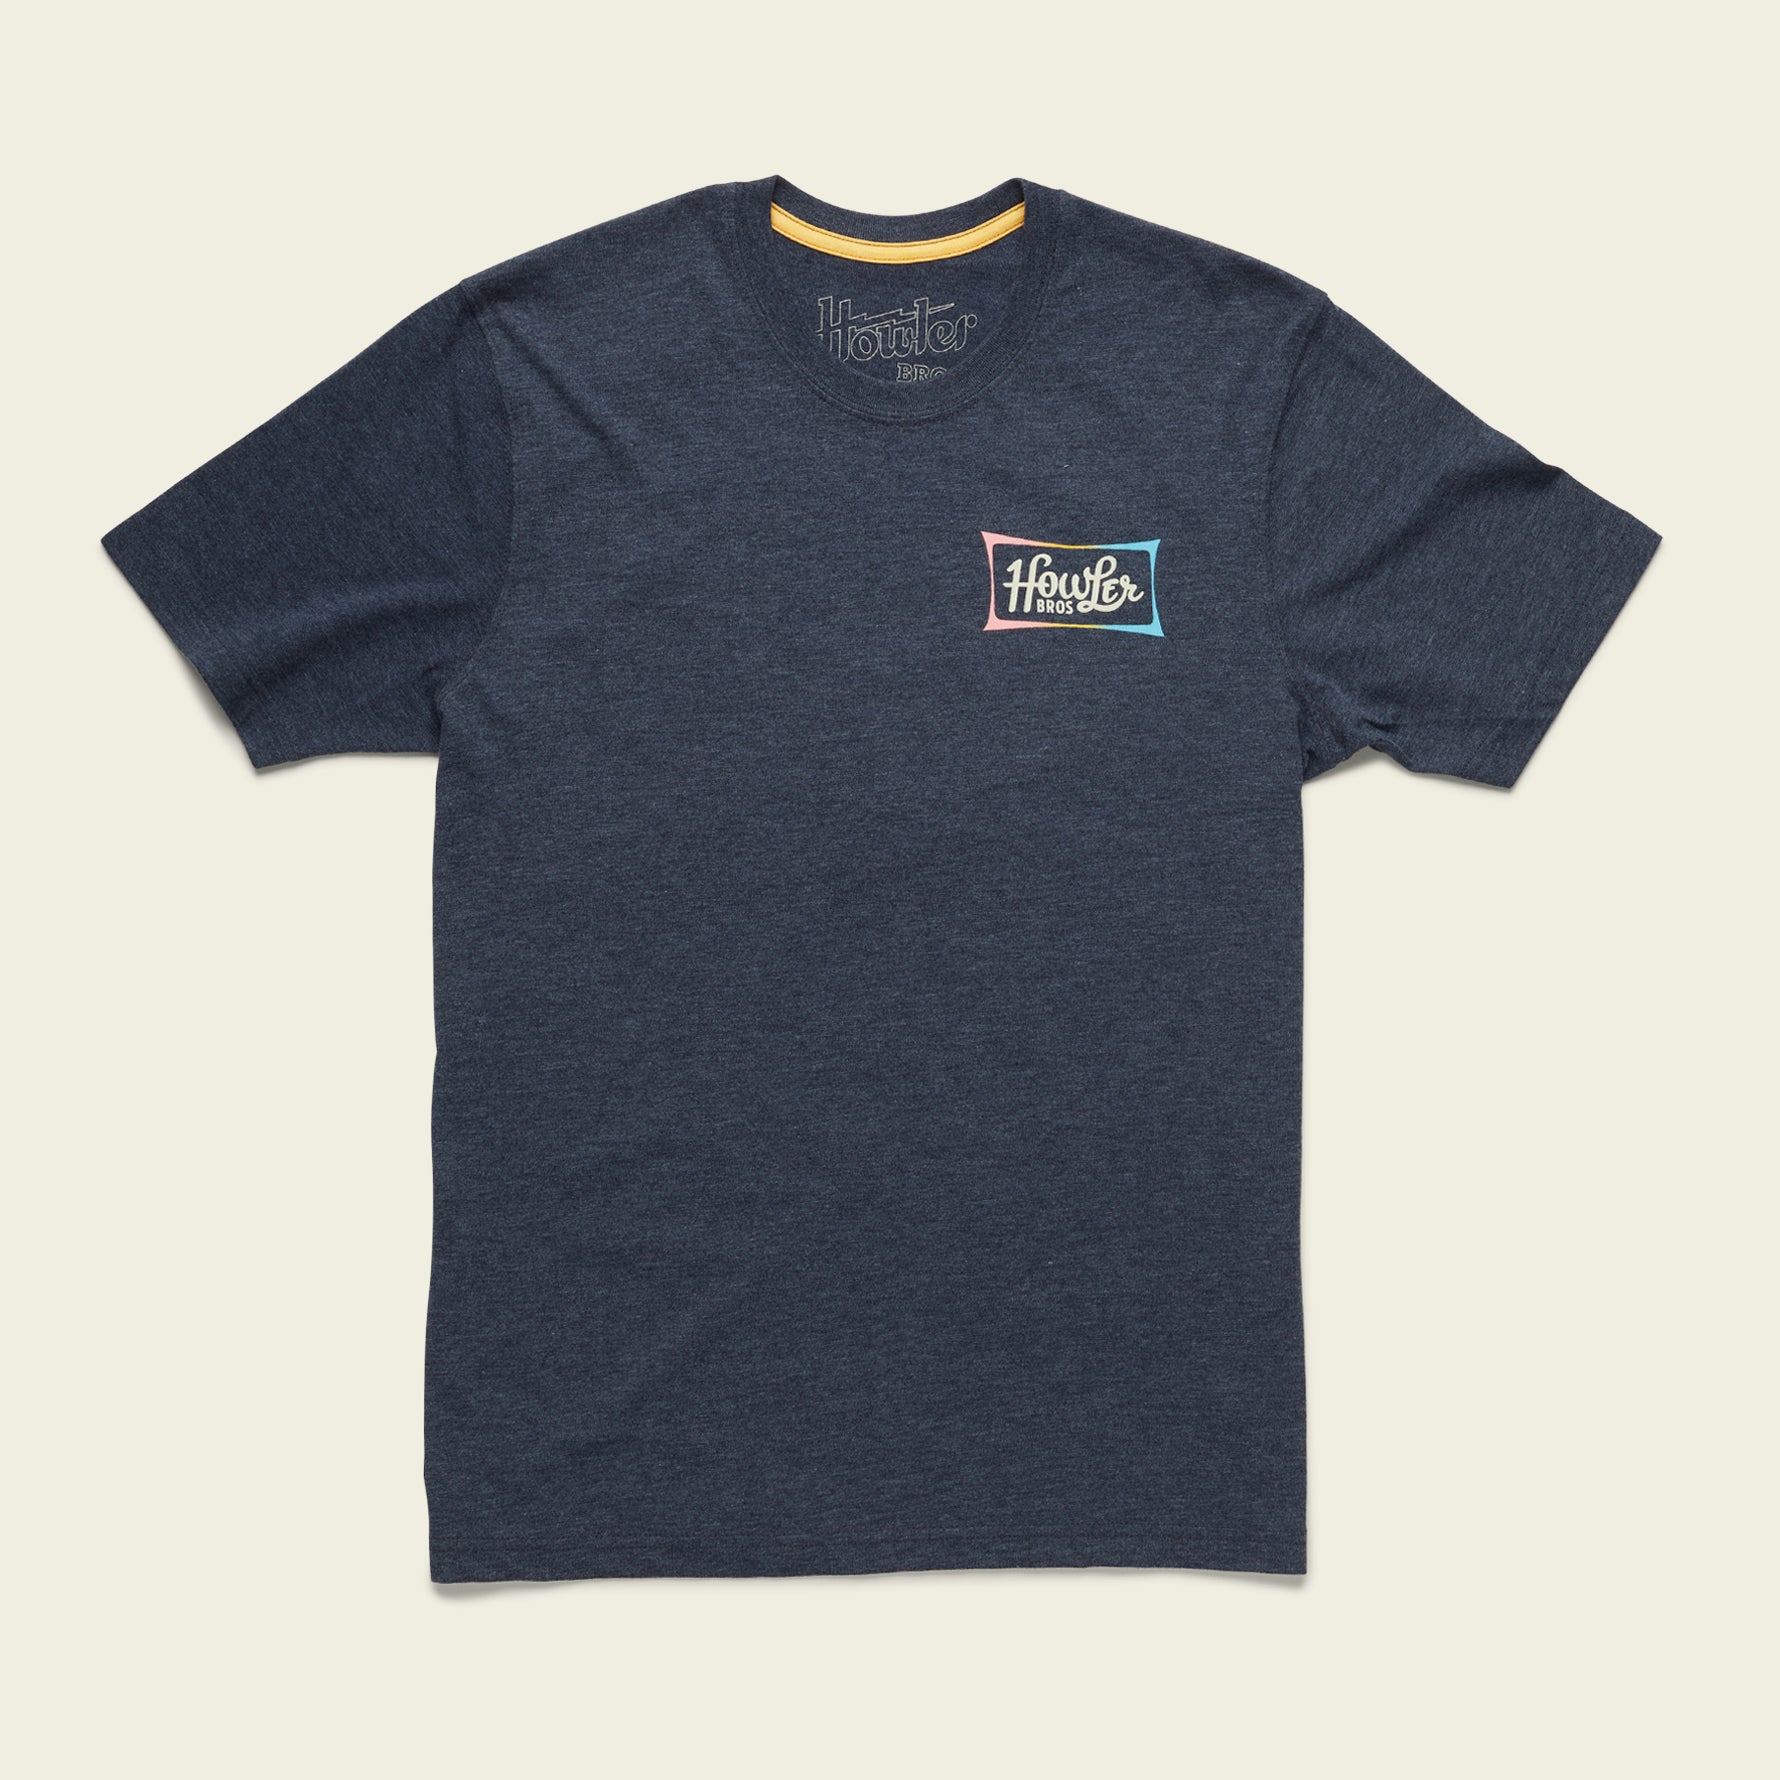 Howler Classic Surf T-Shirt